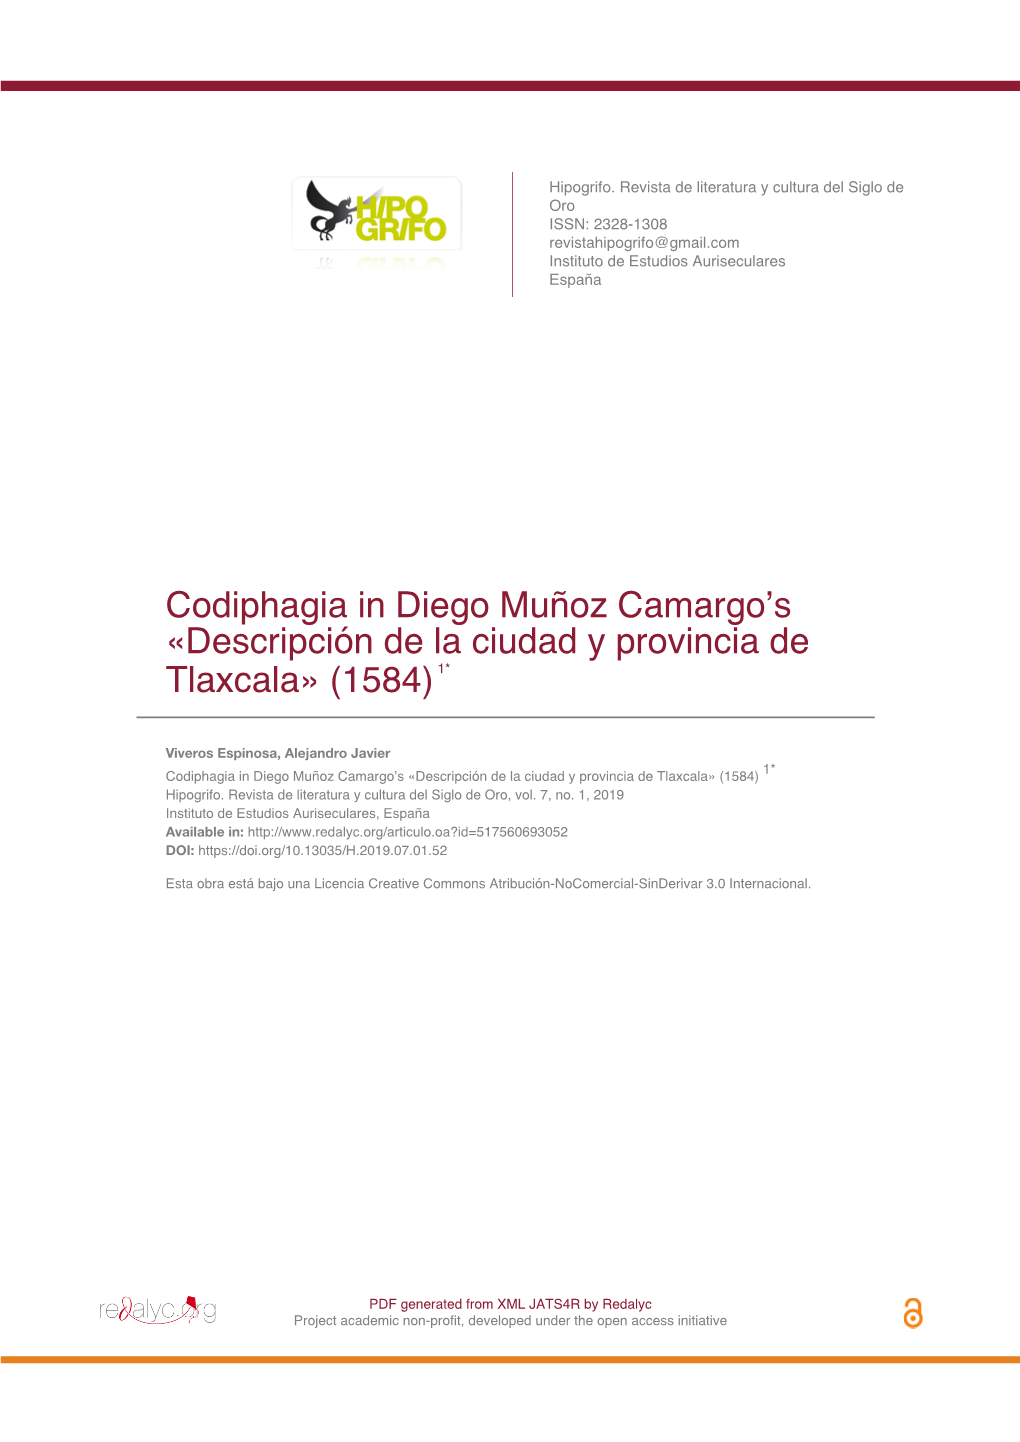 Codiphagia in Diego Muñoz Camargo's